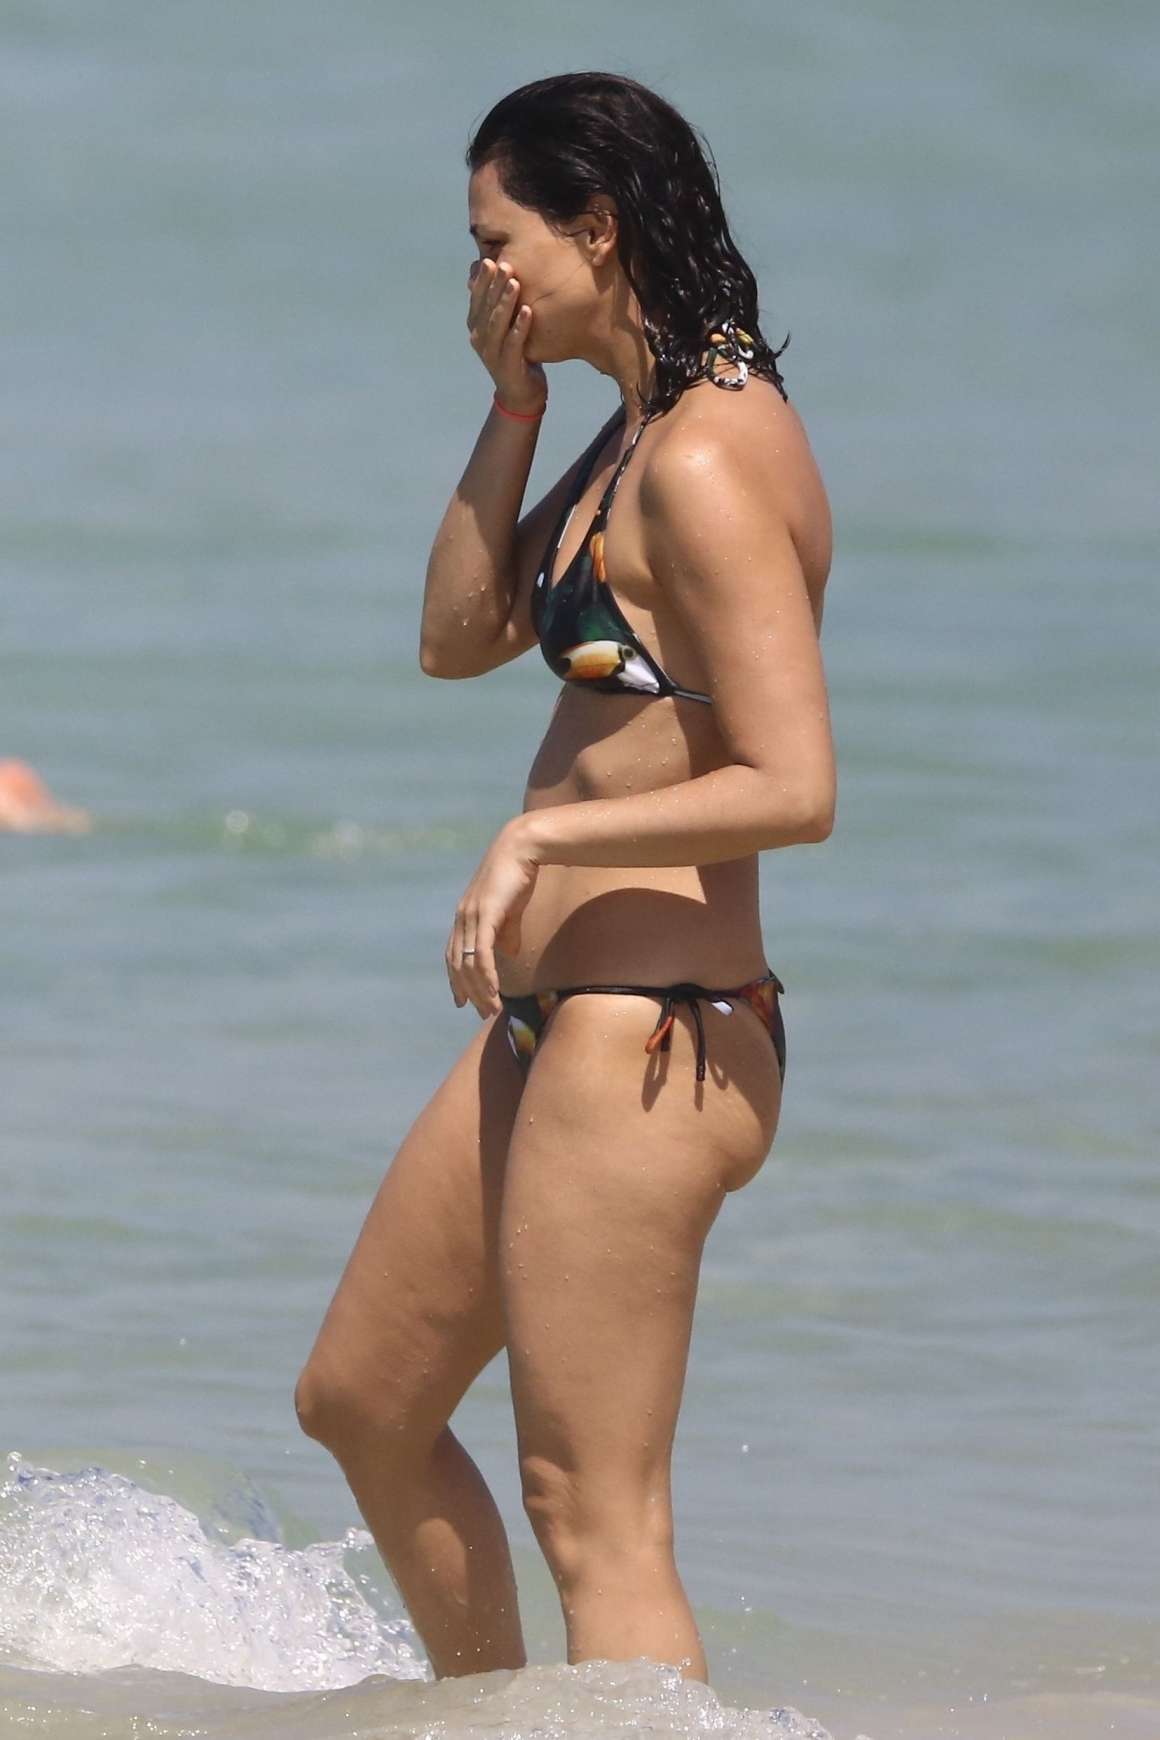 Morena Baccarin in Bikini at a beach in Rio de Janeiro